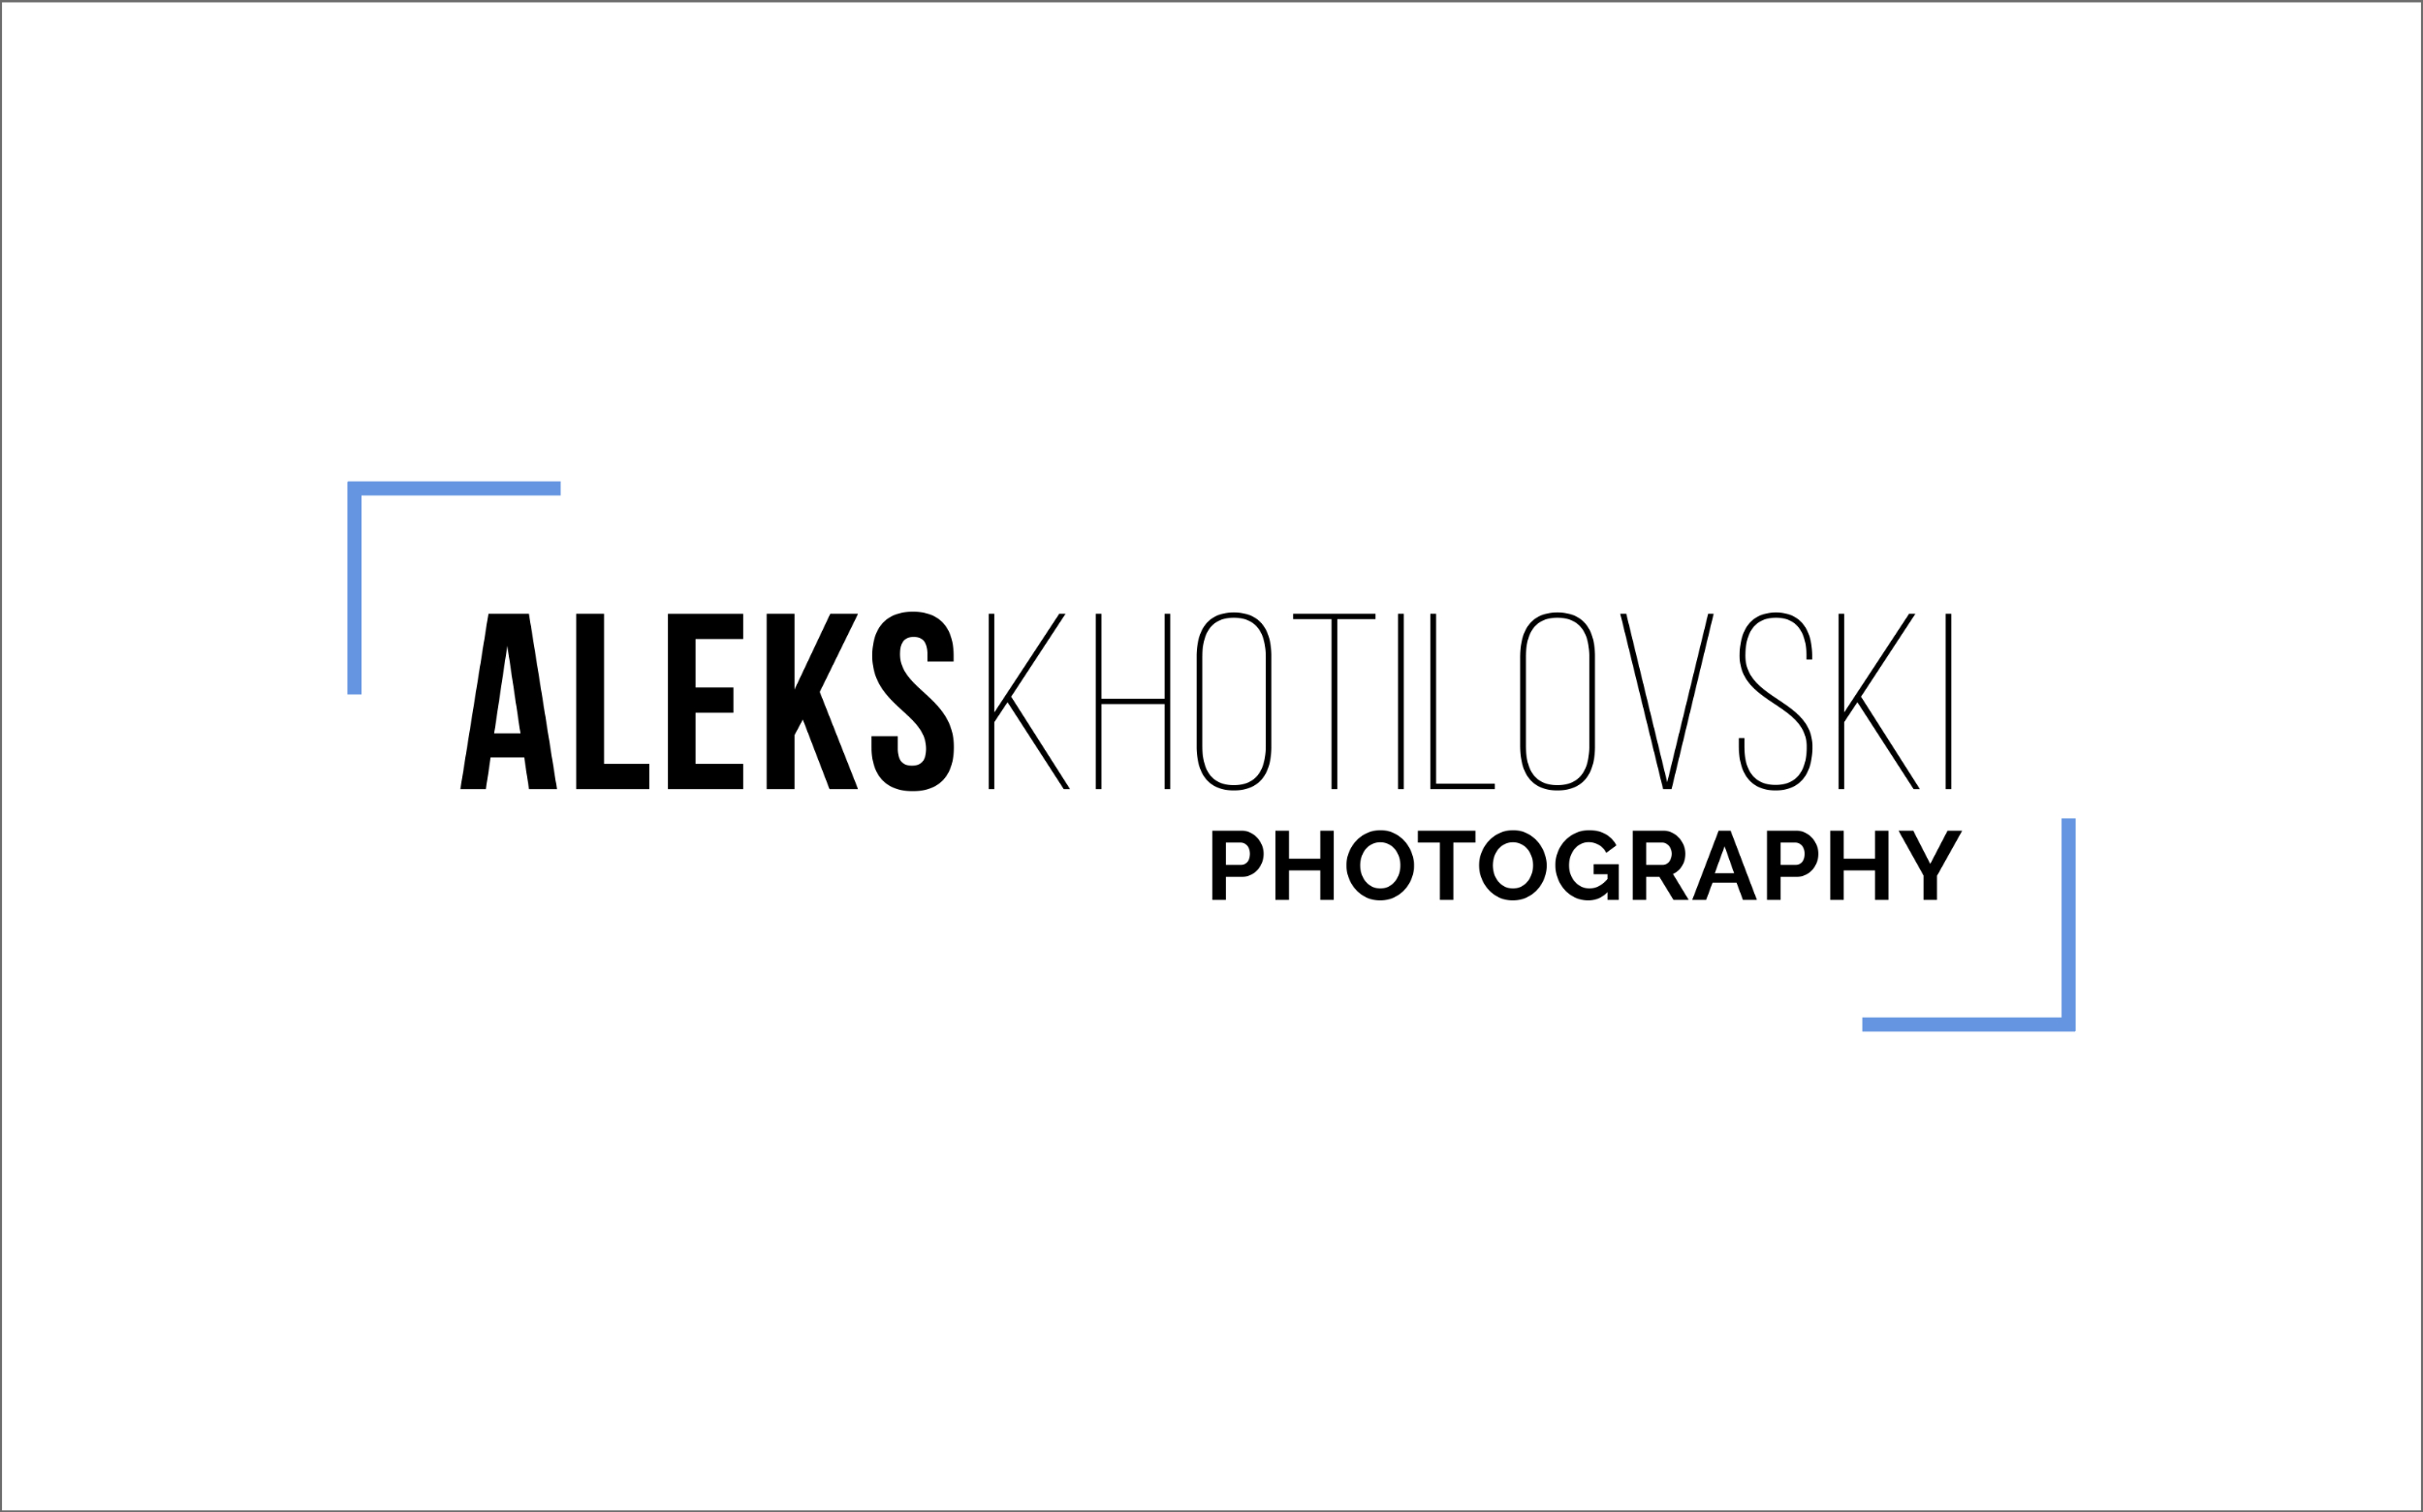 Logo Design for Aleks Khotilovski Photography .  Made by Jon Glanville - Plymouth Graphic Designer.